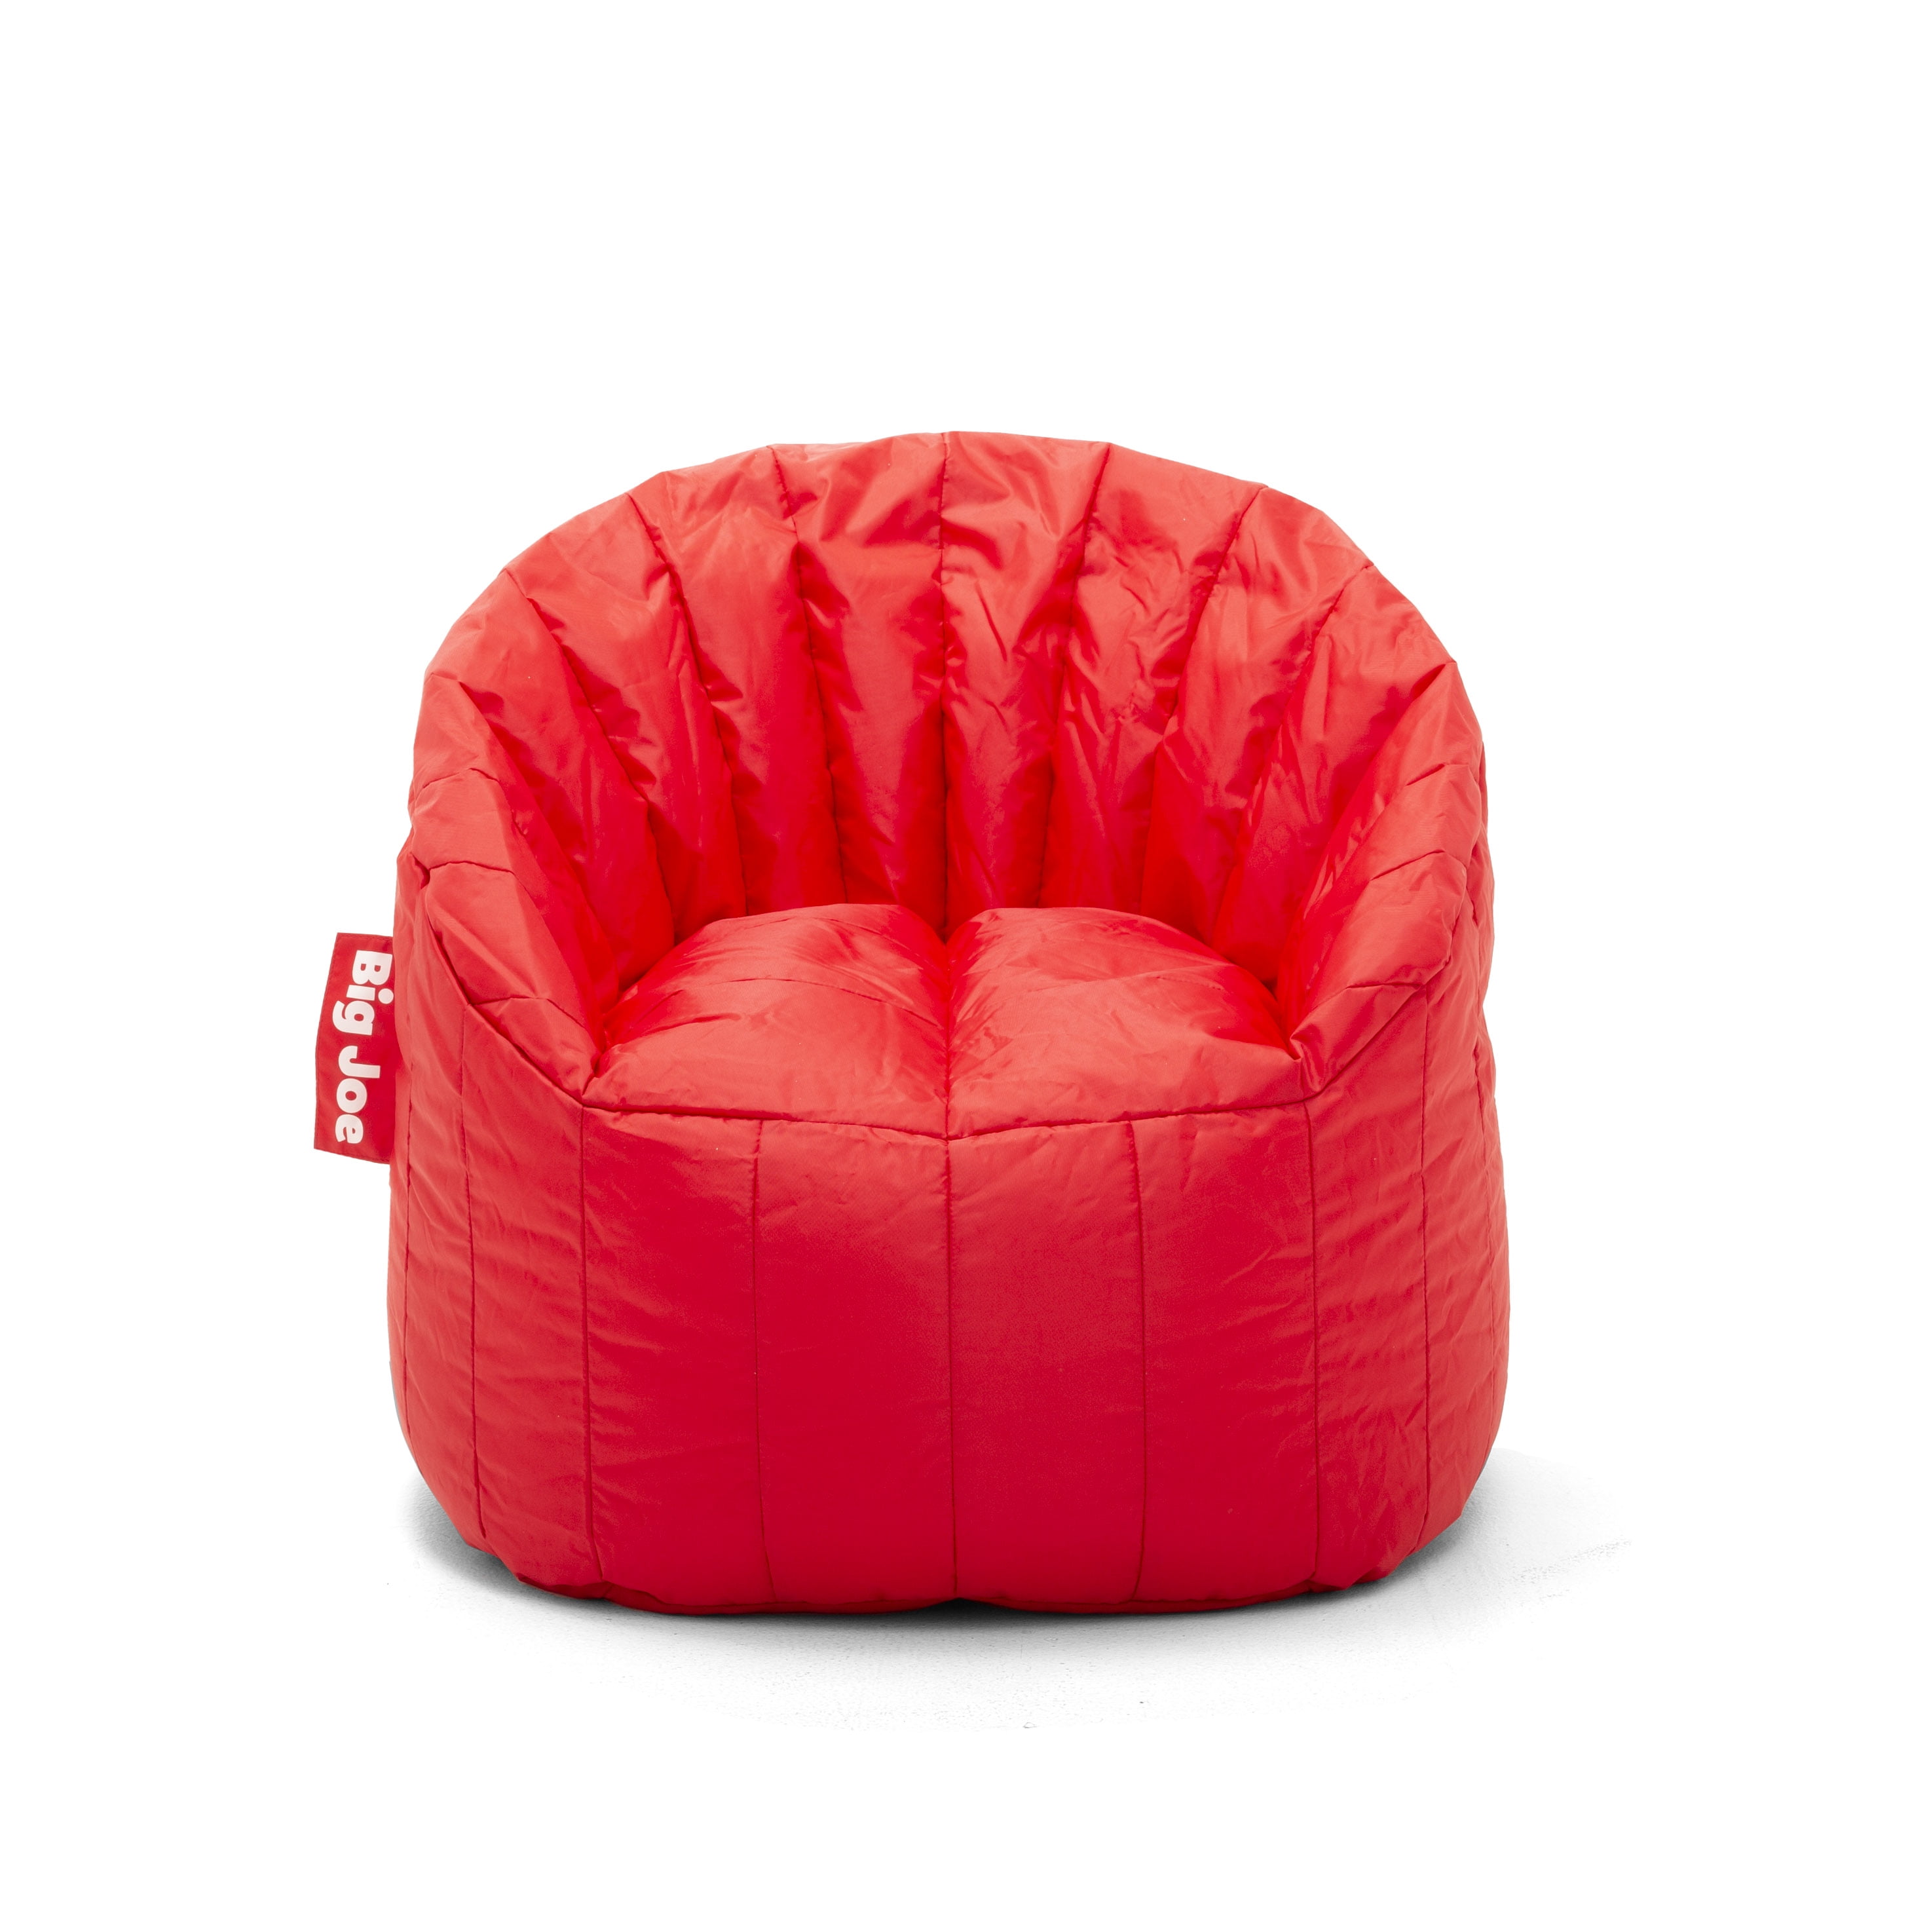 Big Joe Lumin Bean Bag Chair Red, Big Joe Hug Bean Bag Chair Multiple Colors